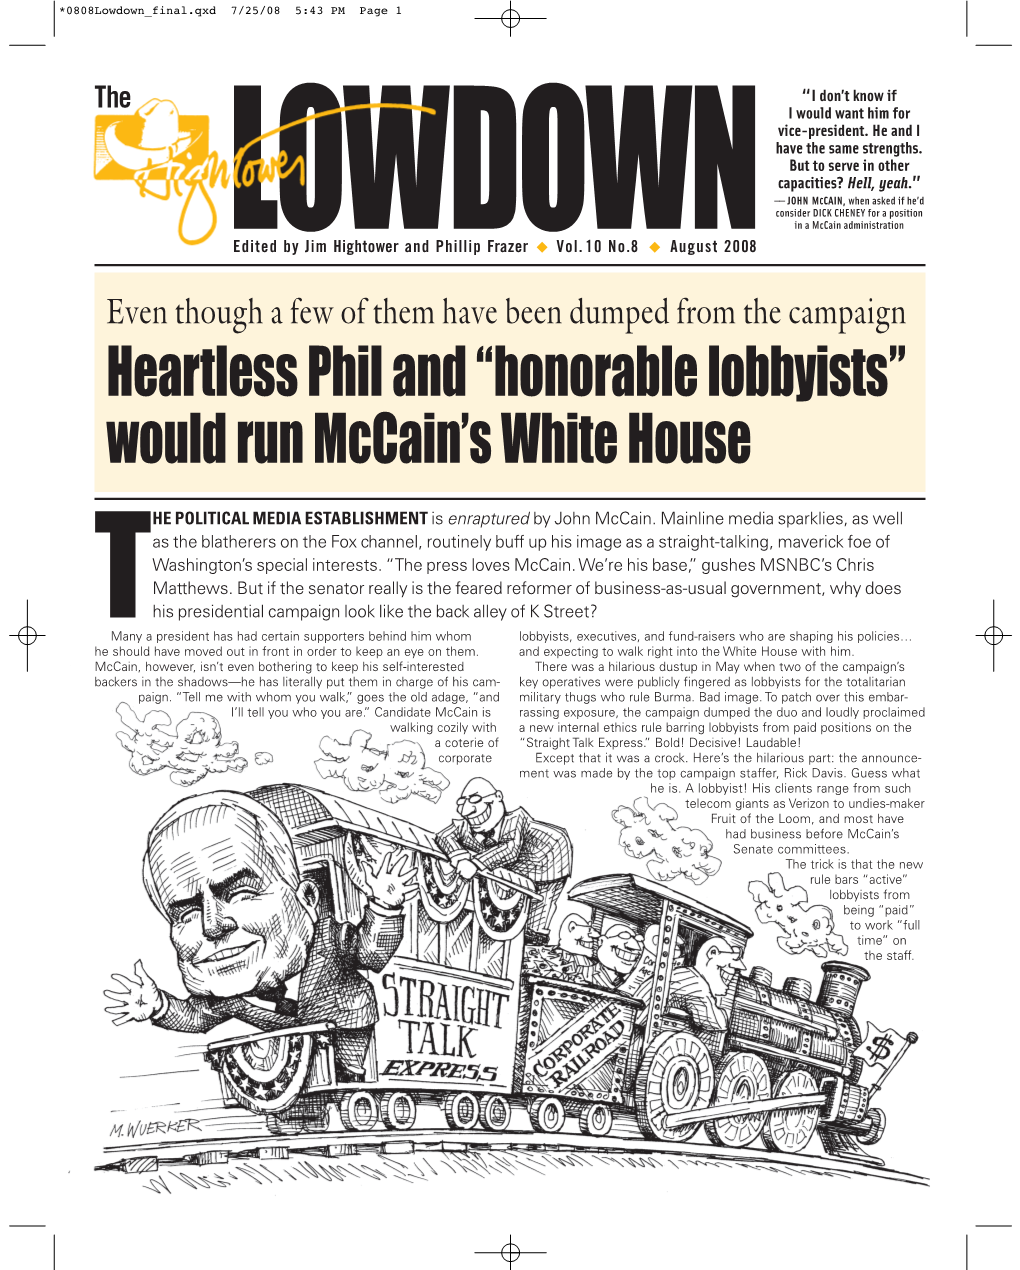 Honorable Lobbyists” Would Run Mccain’S White House